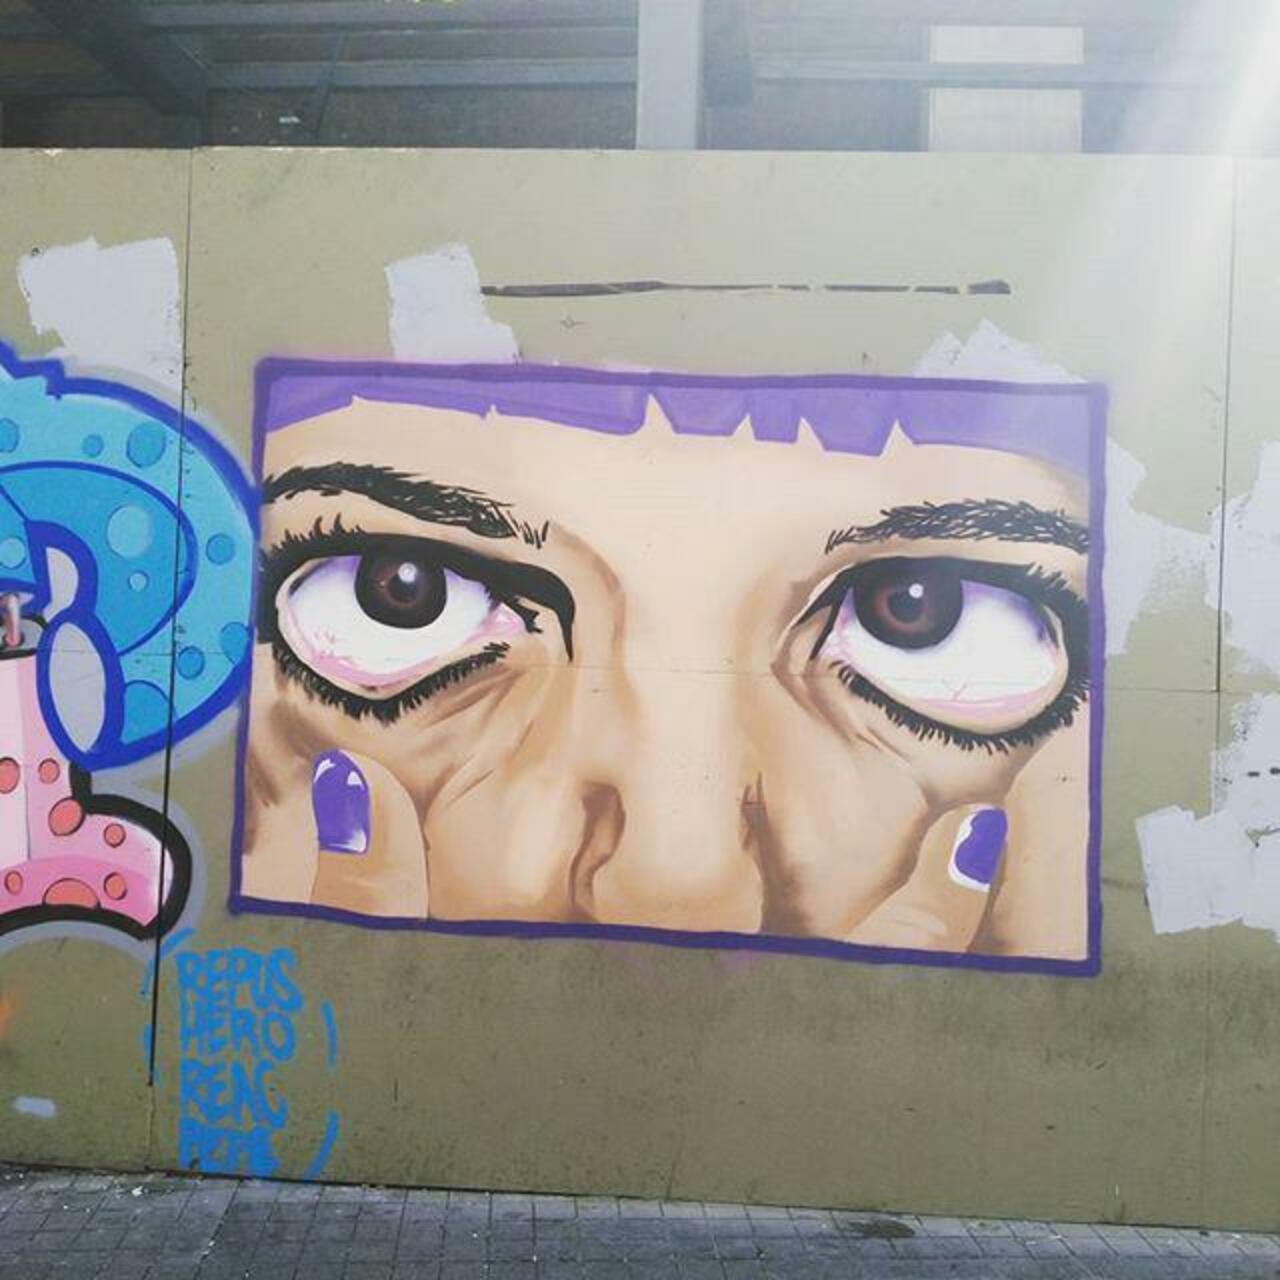 #repus #hero #pepe #graffiti #streetart #streetartistanbul #girl #emo #mural #taksim #turkey #istanbul #reac by mba… http://t.co/AltnCK4FxZ